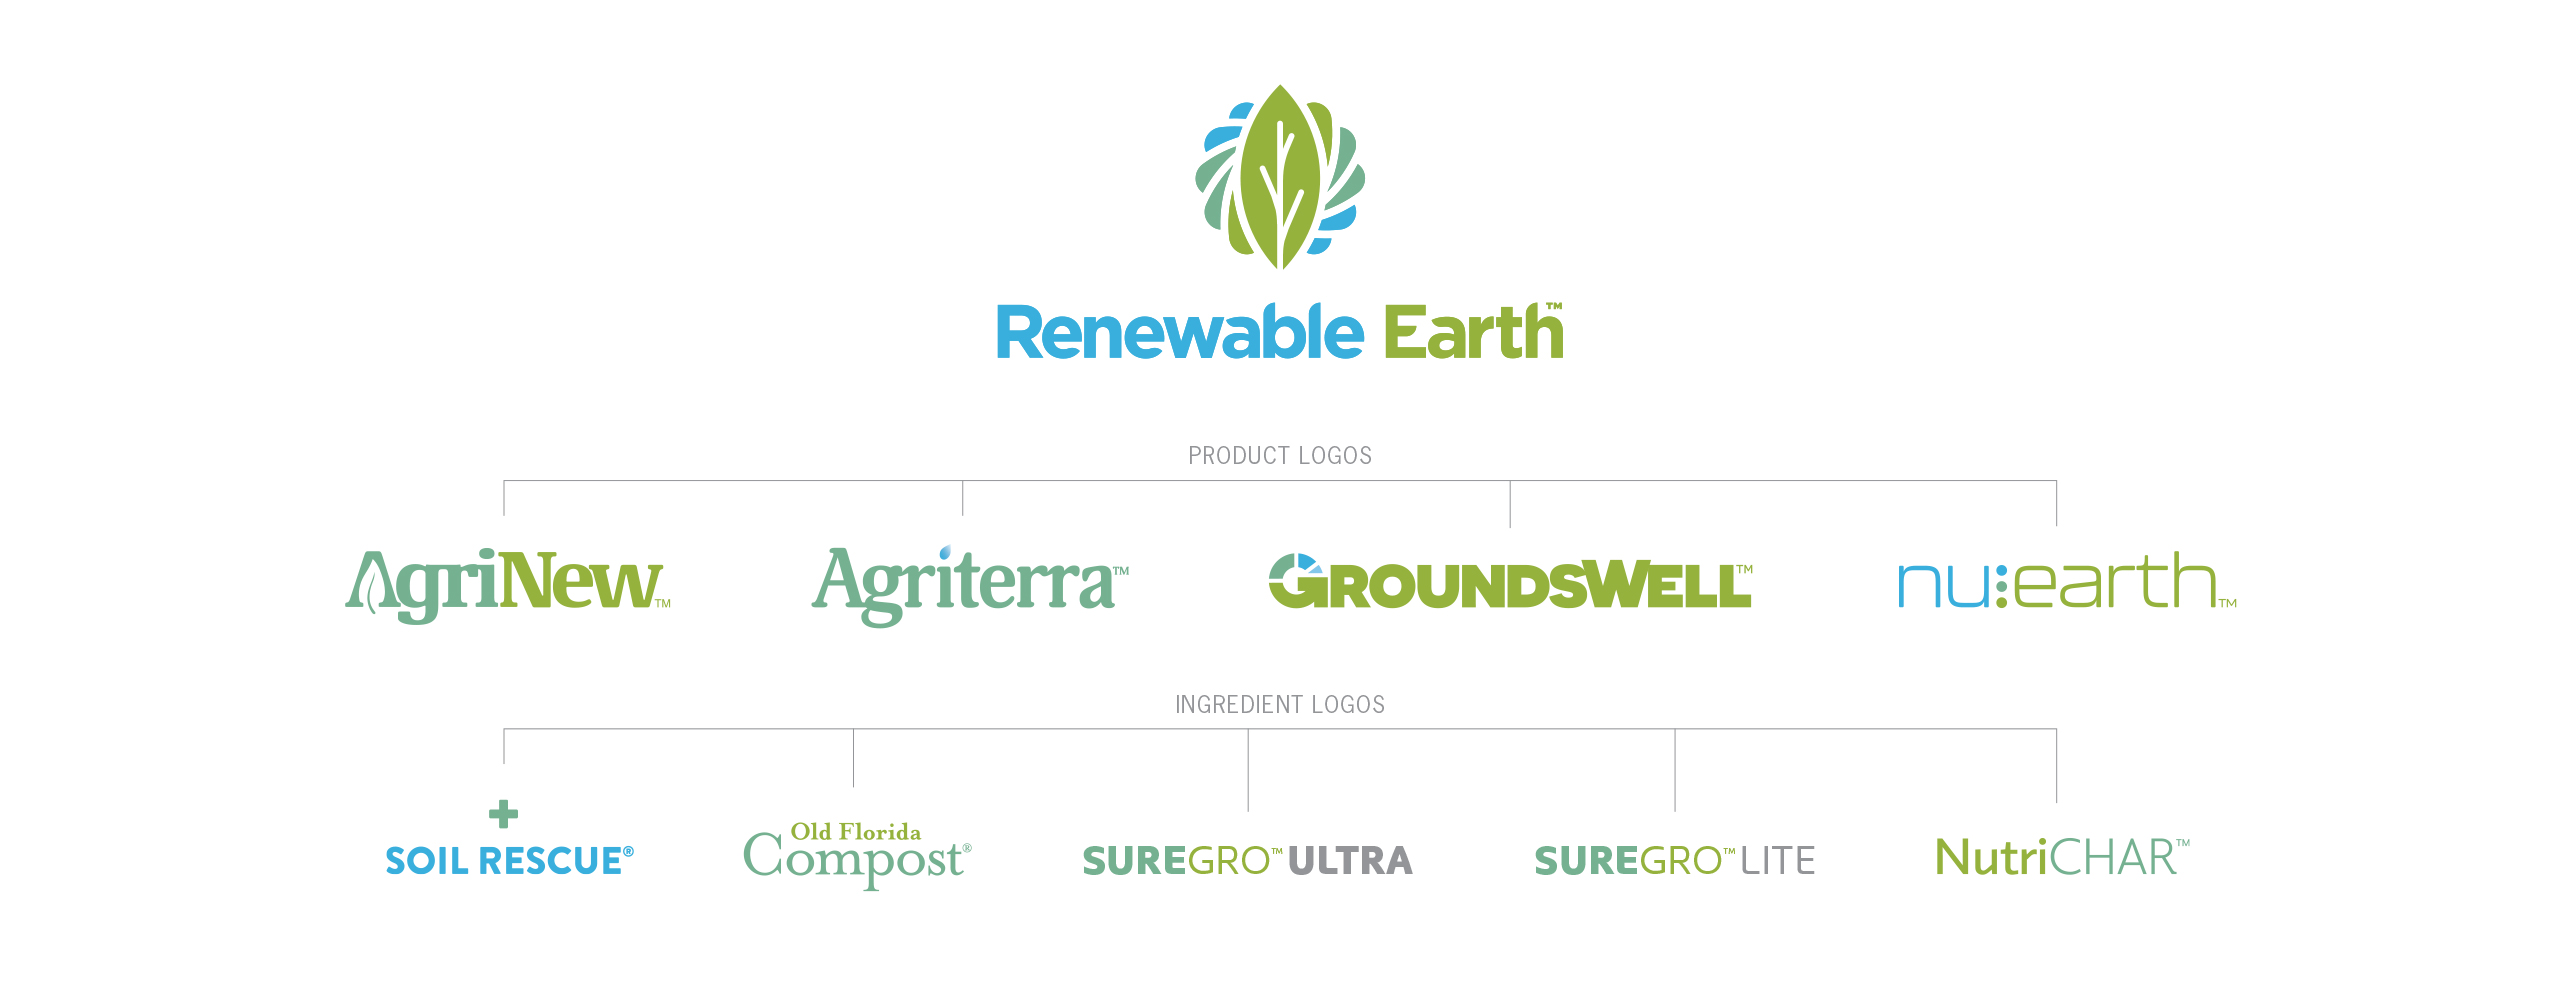 RenewableEarth Logo Schematic